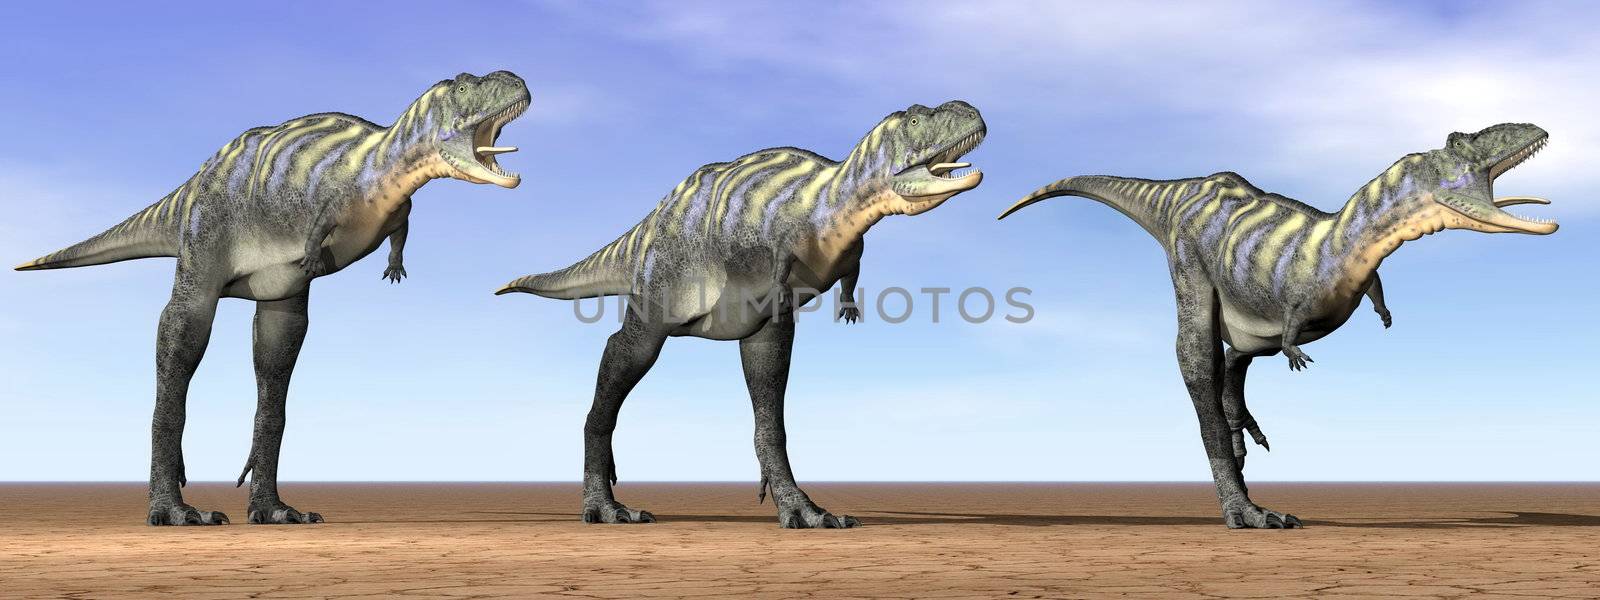 Acasaurus dinosaurs in the desert - 3D render by Elenaphotos21